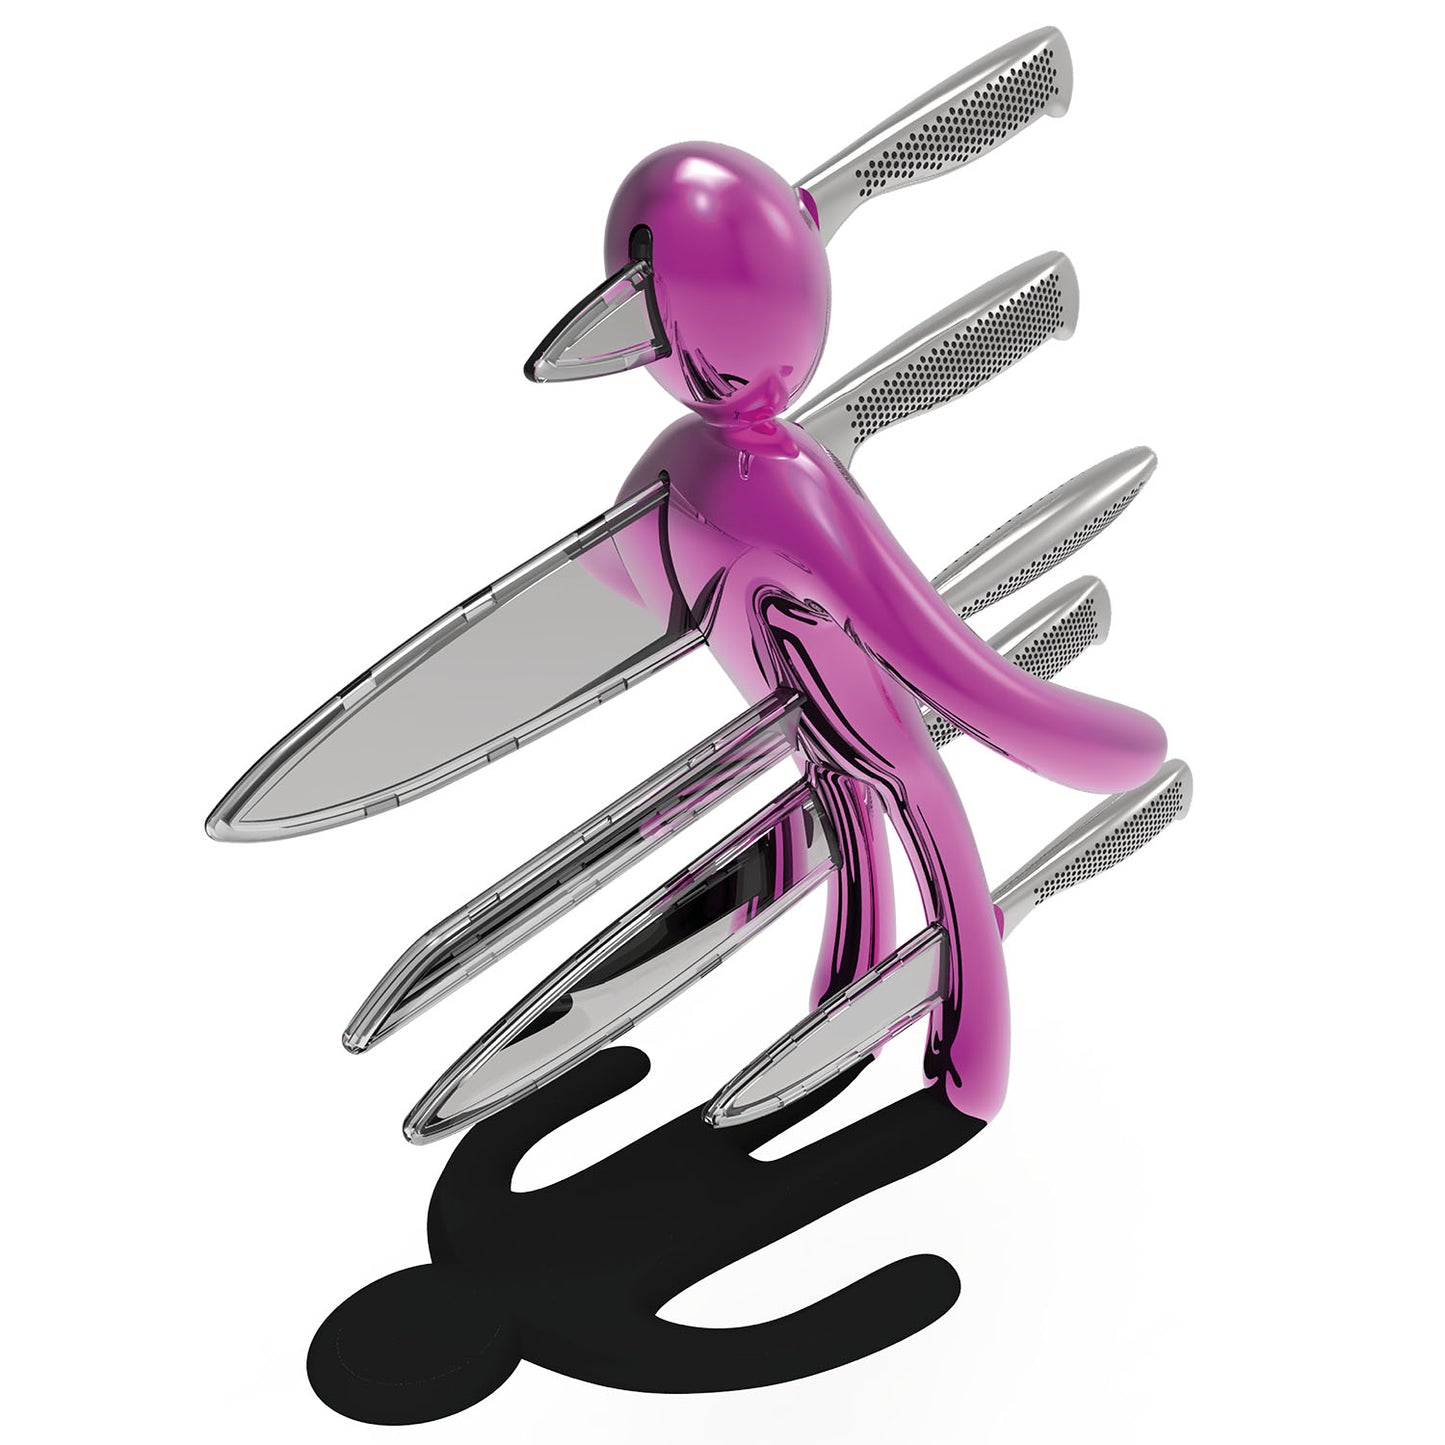 Voodoo/TheEx "Anniversary Edition" Knife Set - Pink Steel Holder